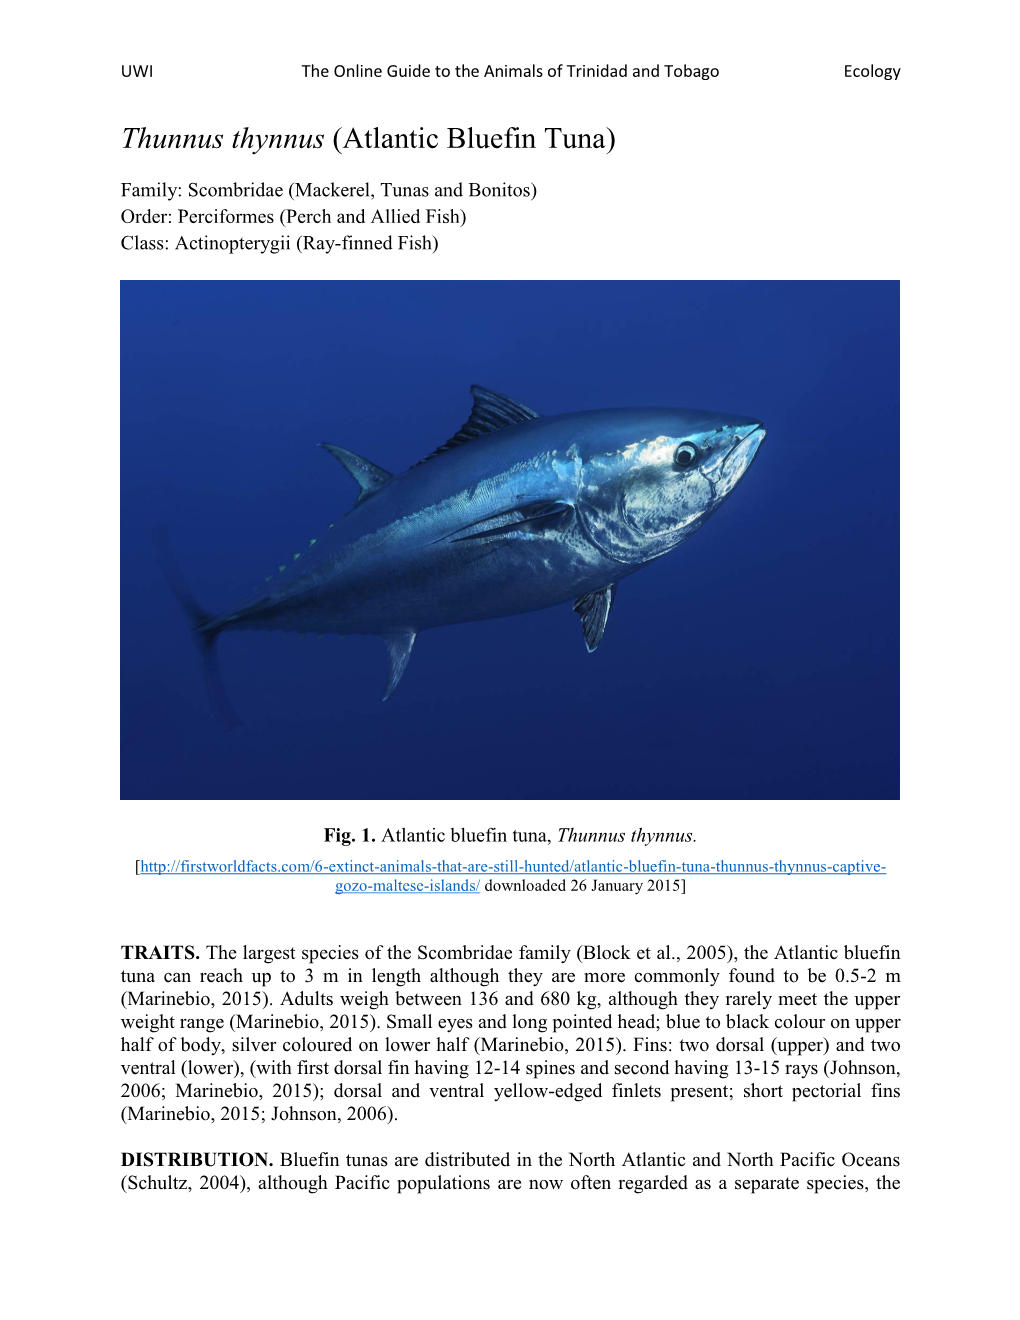 Atlantic Bluefin Tuna)